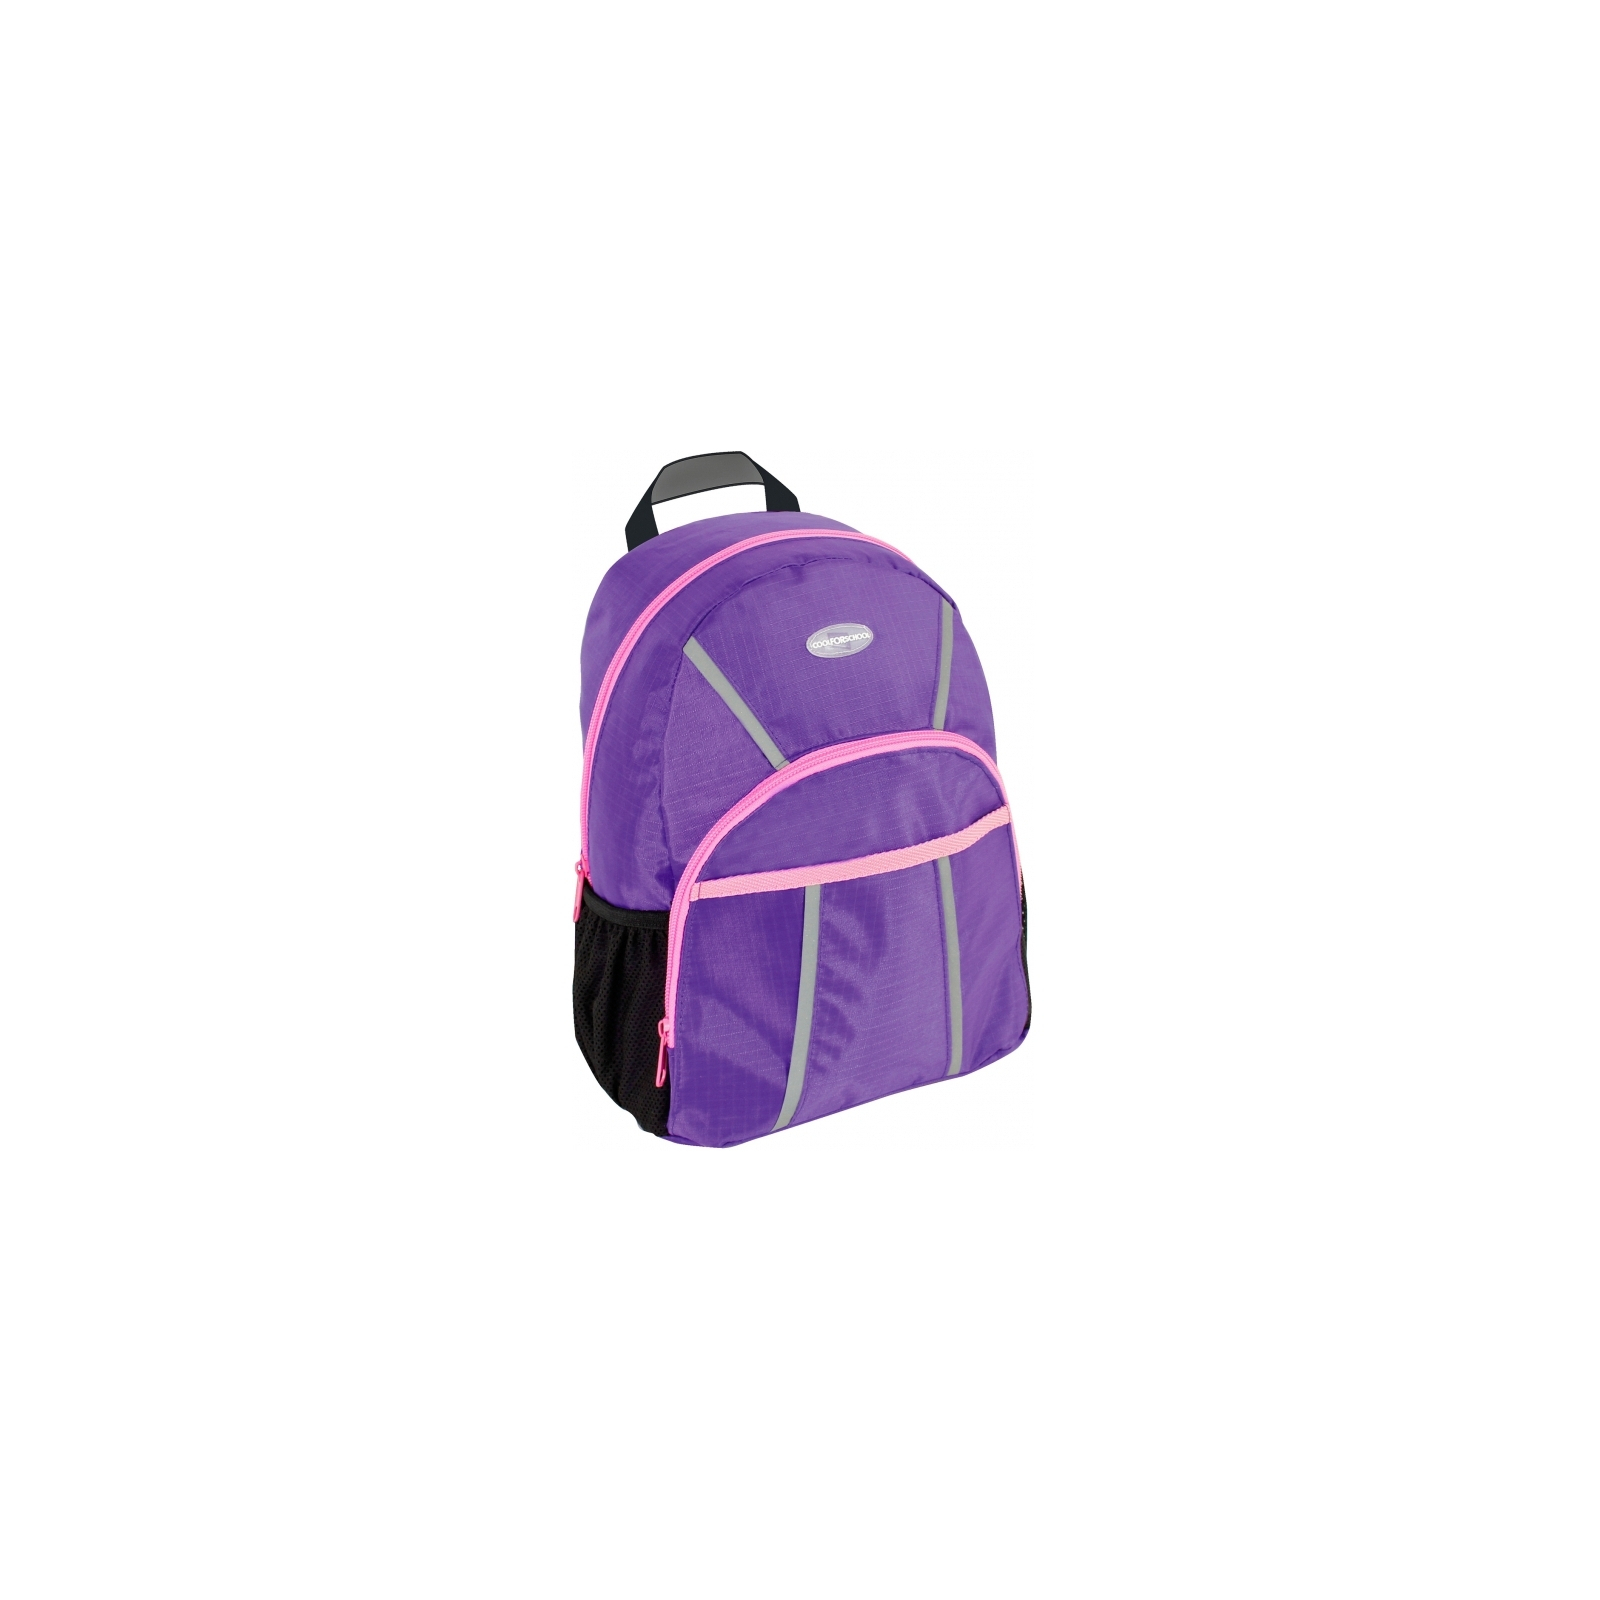 Рюкзак детский Cool For School Fashion Violet 305 (CF85639)